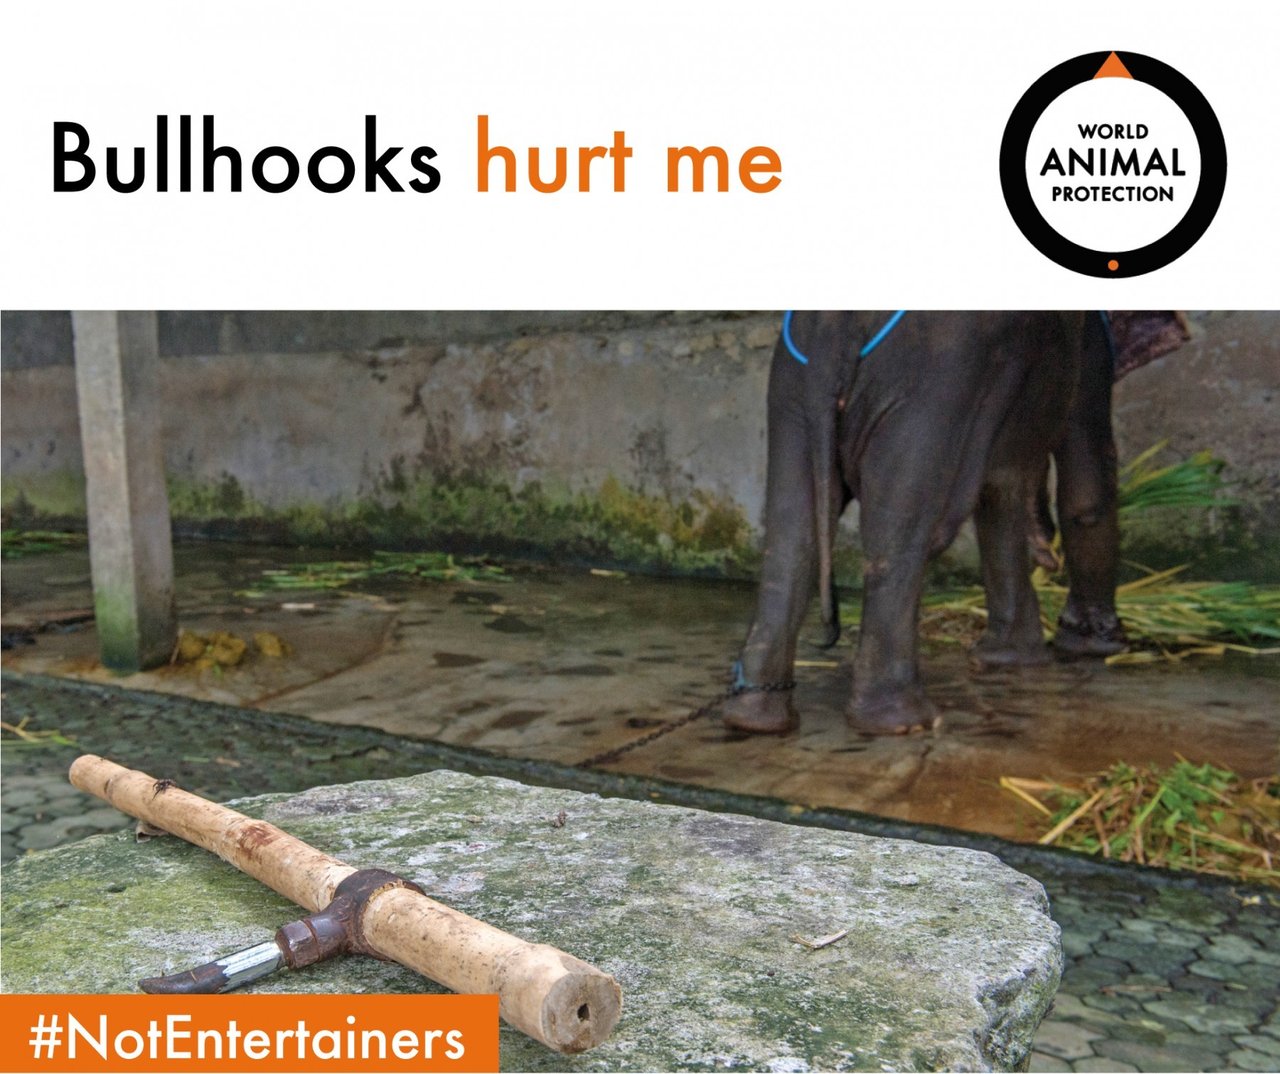 Bullhooks hurt elephants 